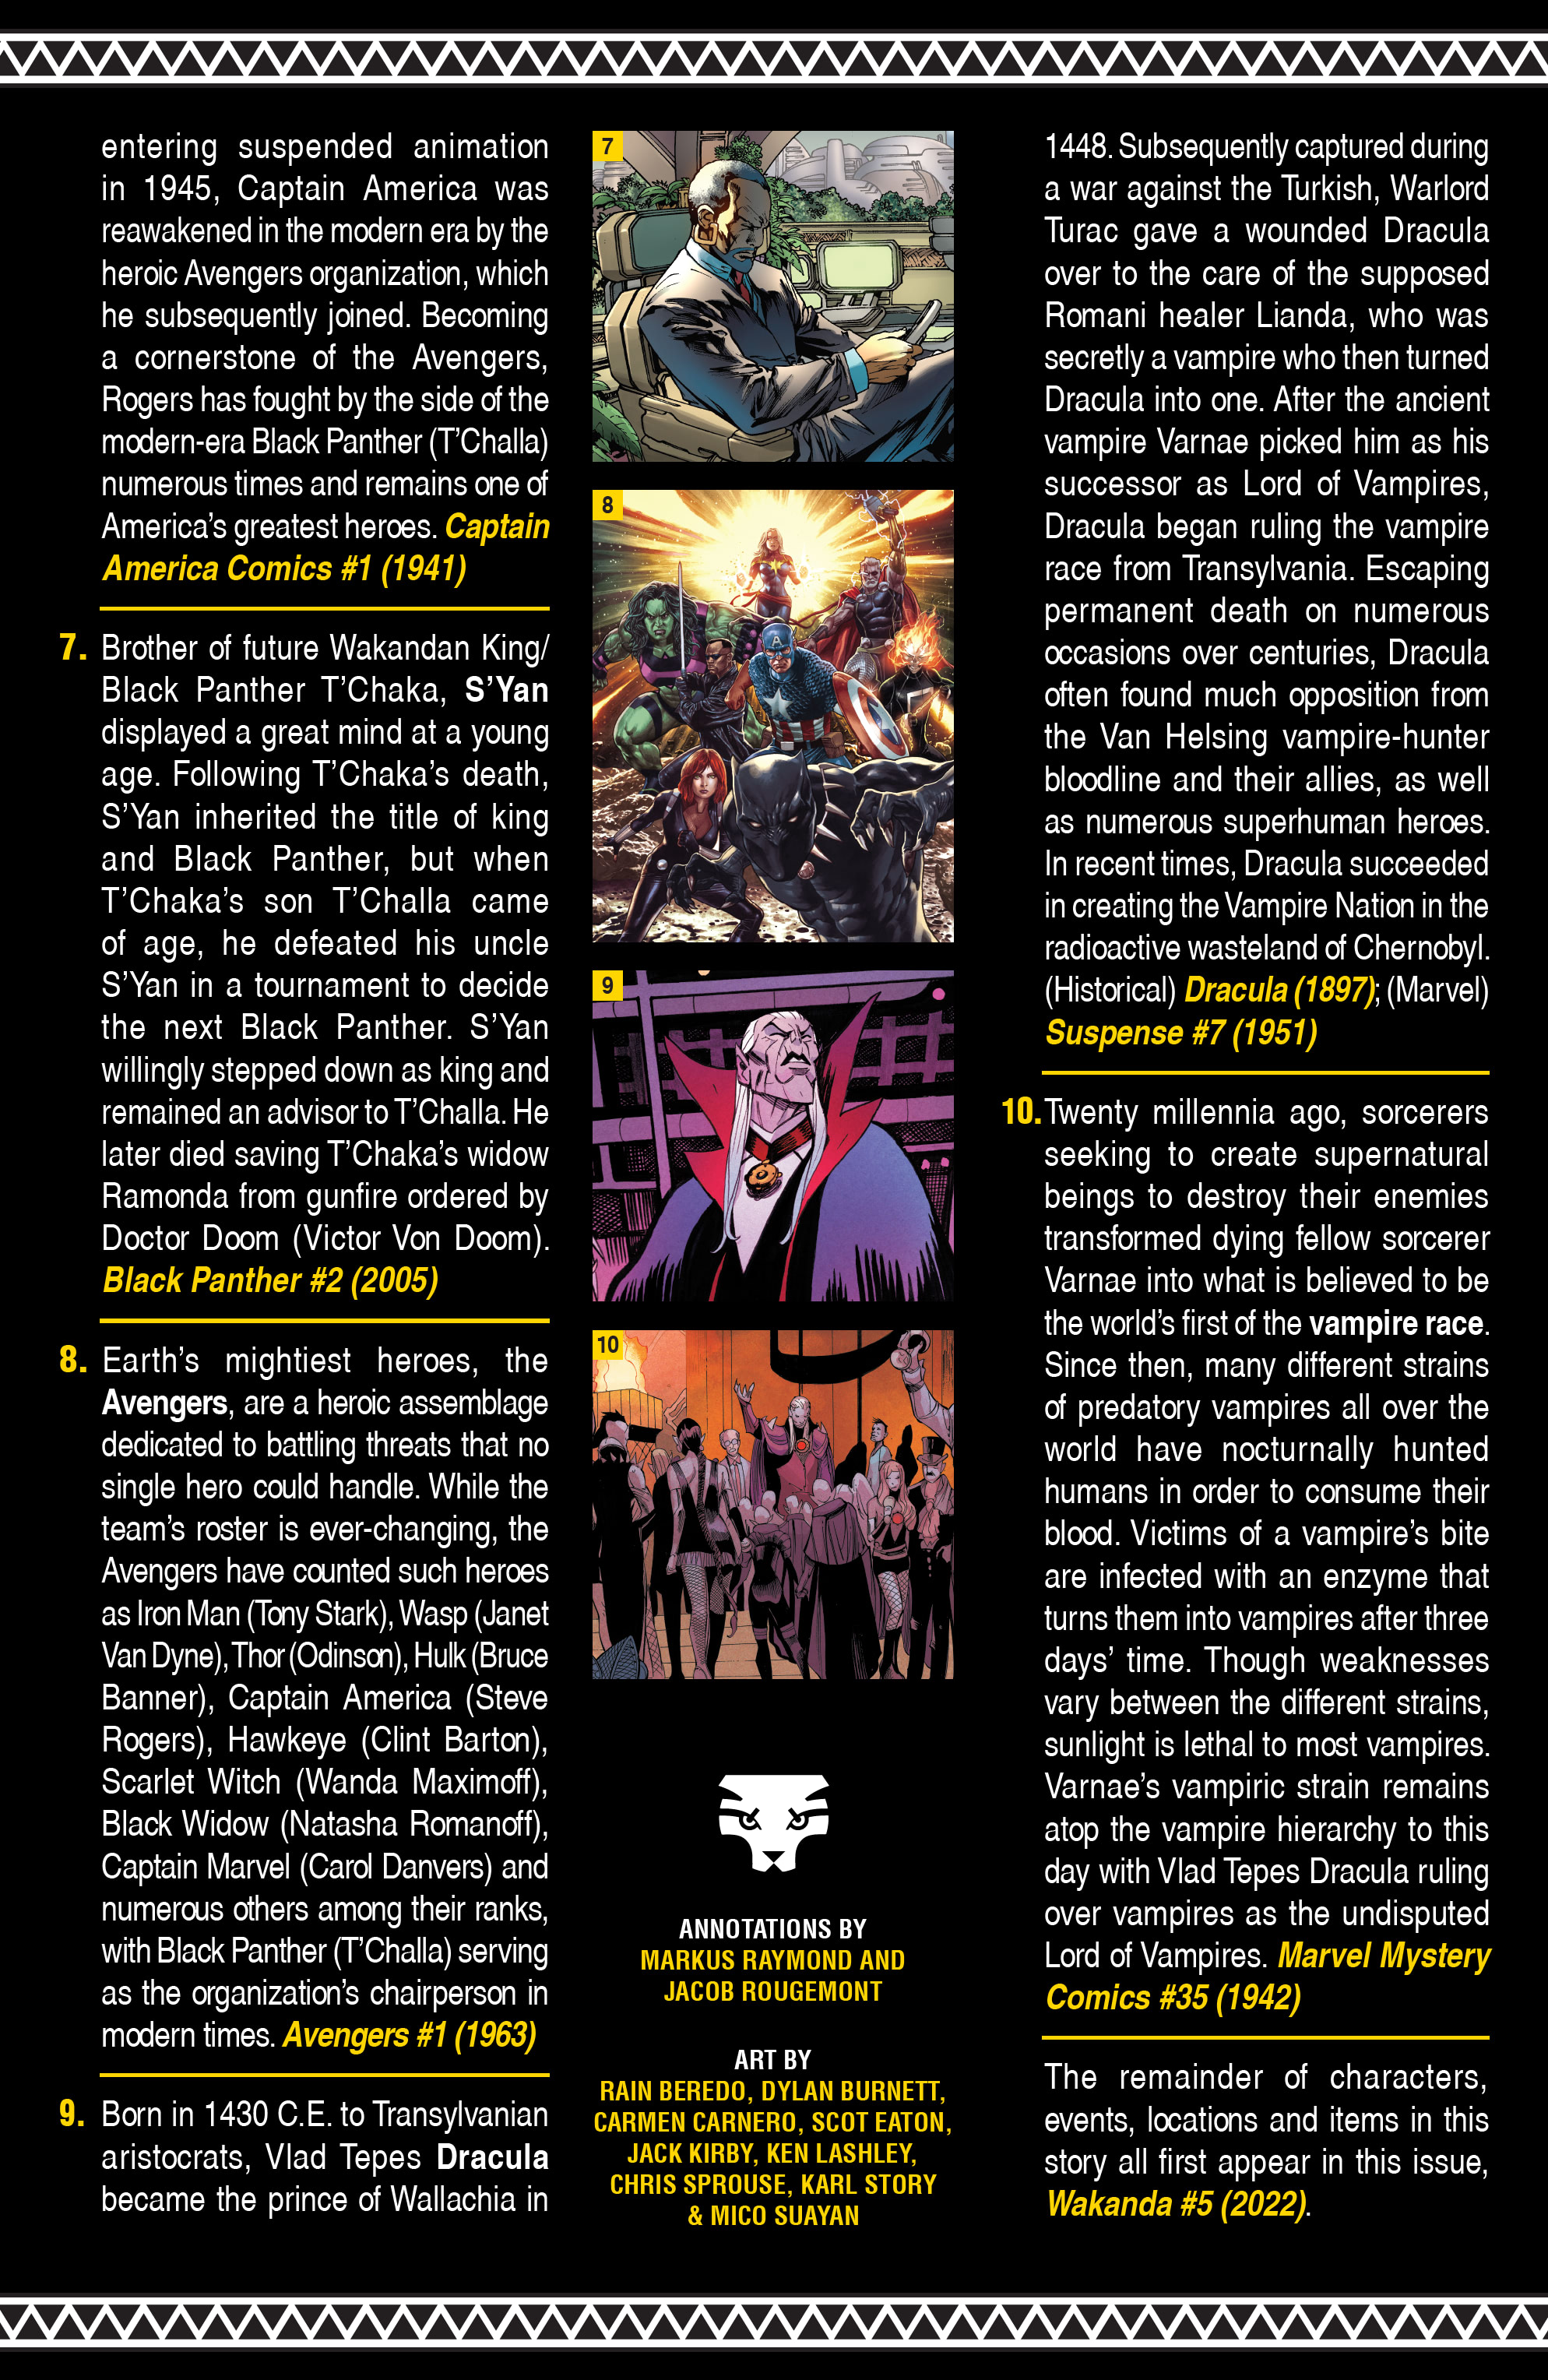 Read online Wakanda comic -  Issue #5 - 23